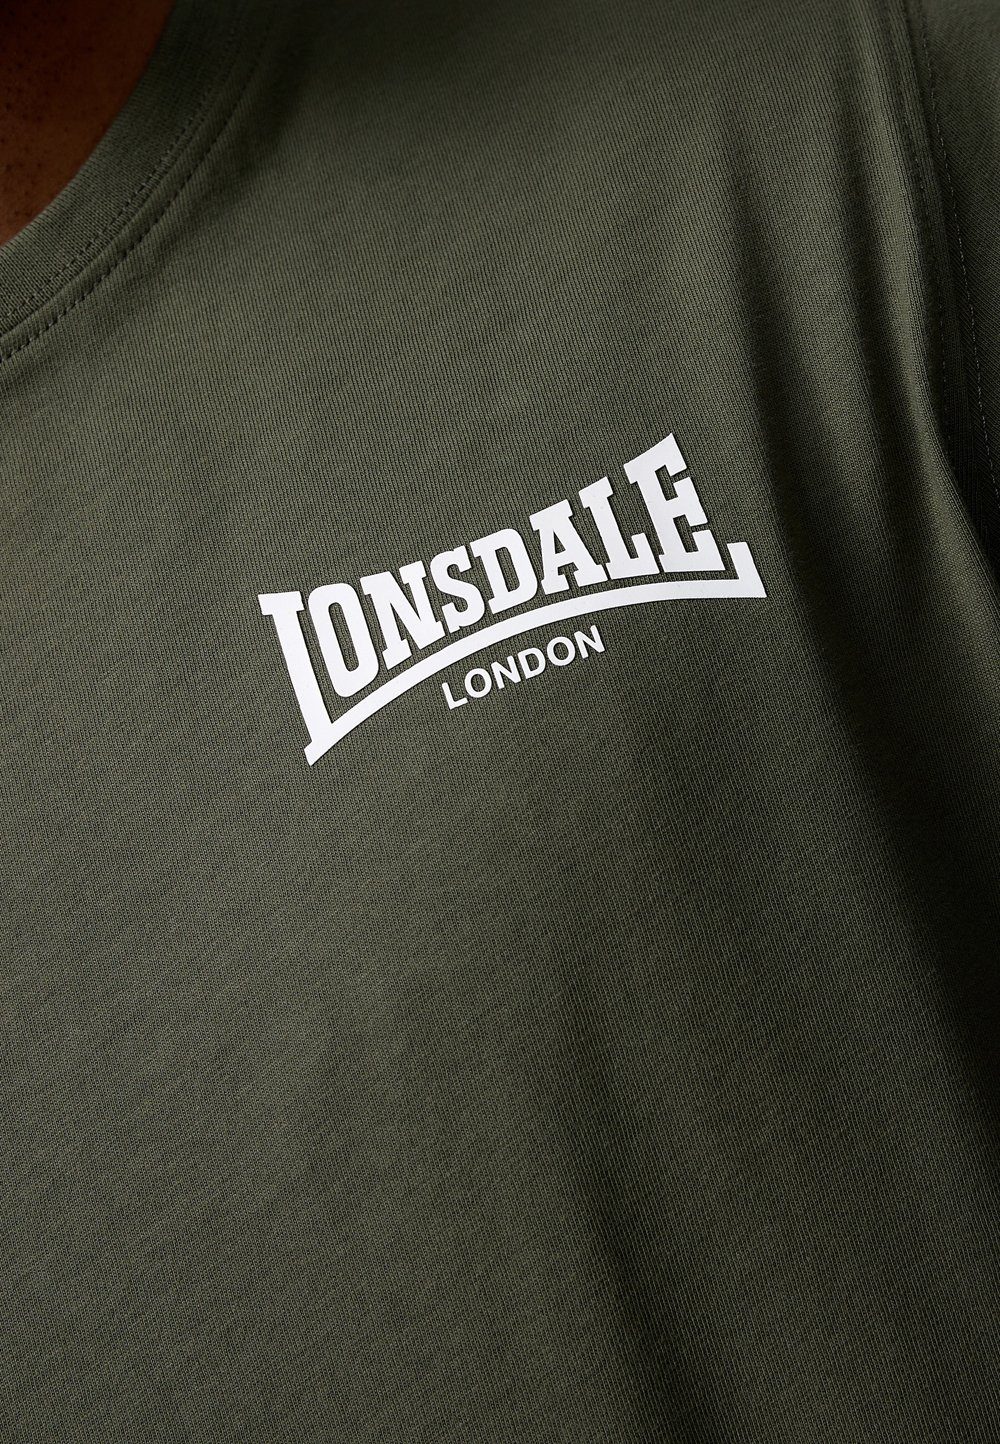 ELMDON Lonsdale T-Shirt Olive/White